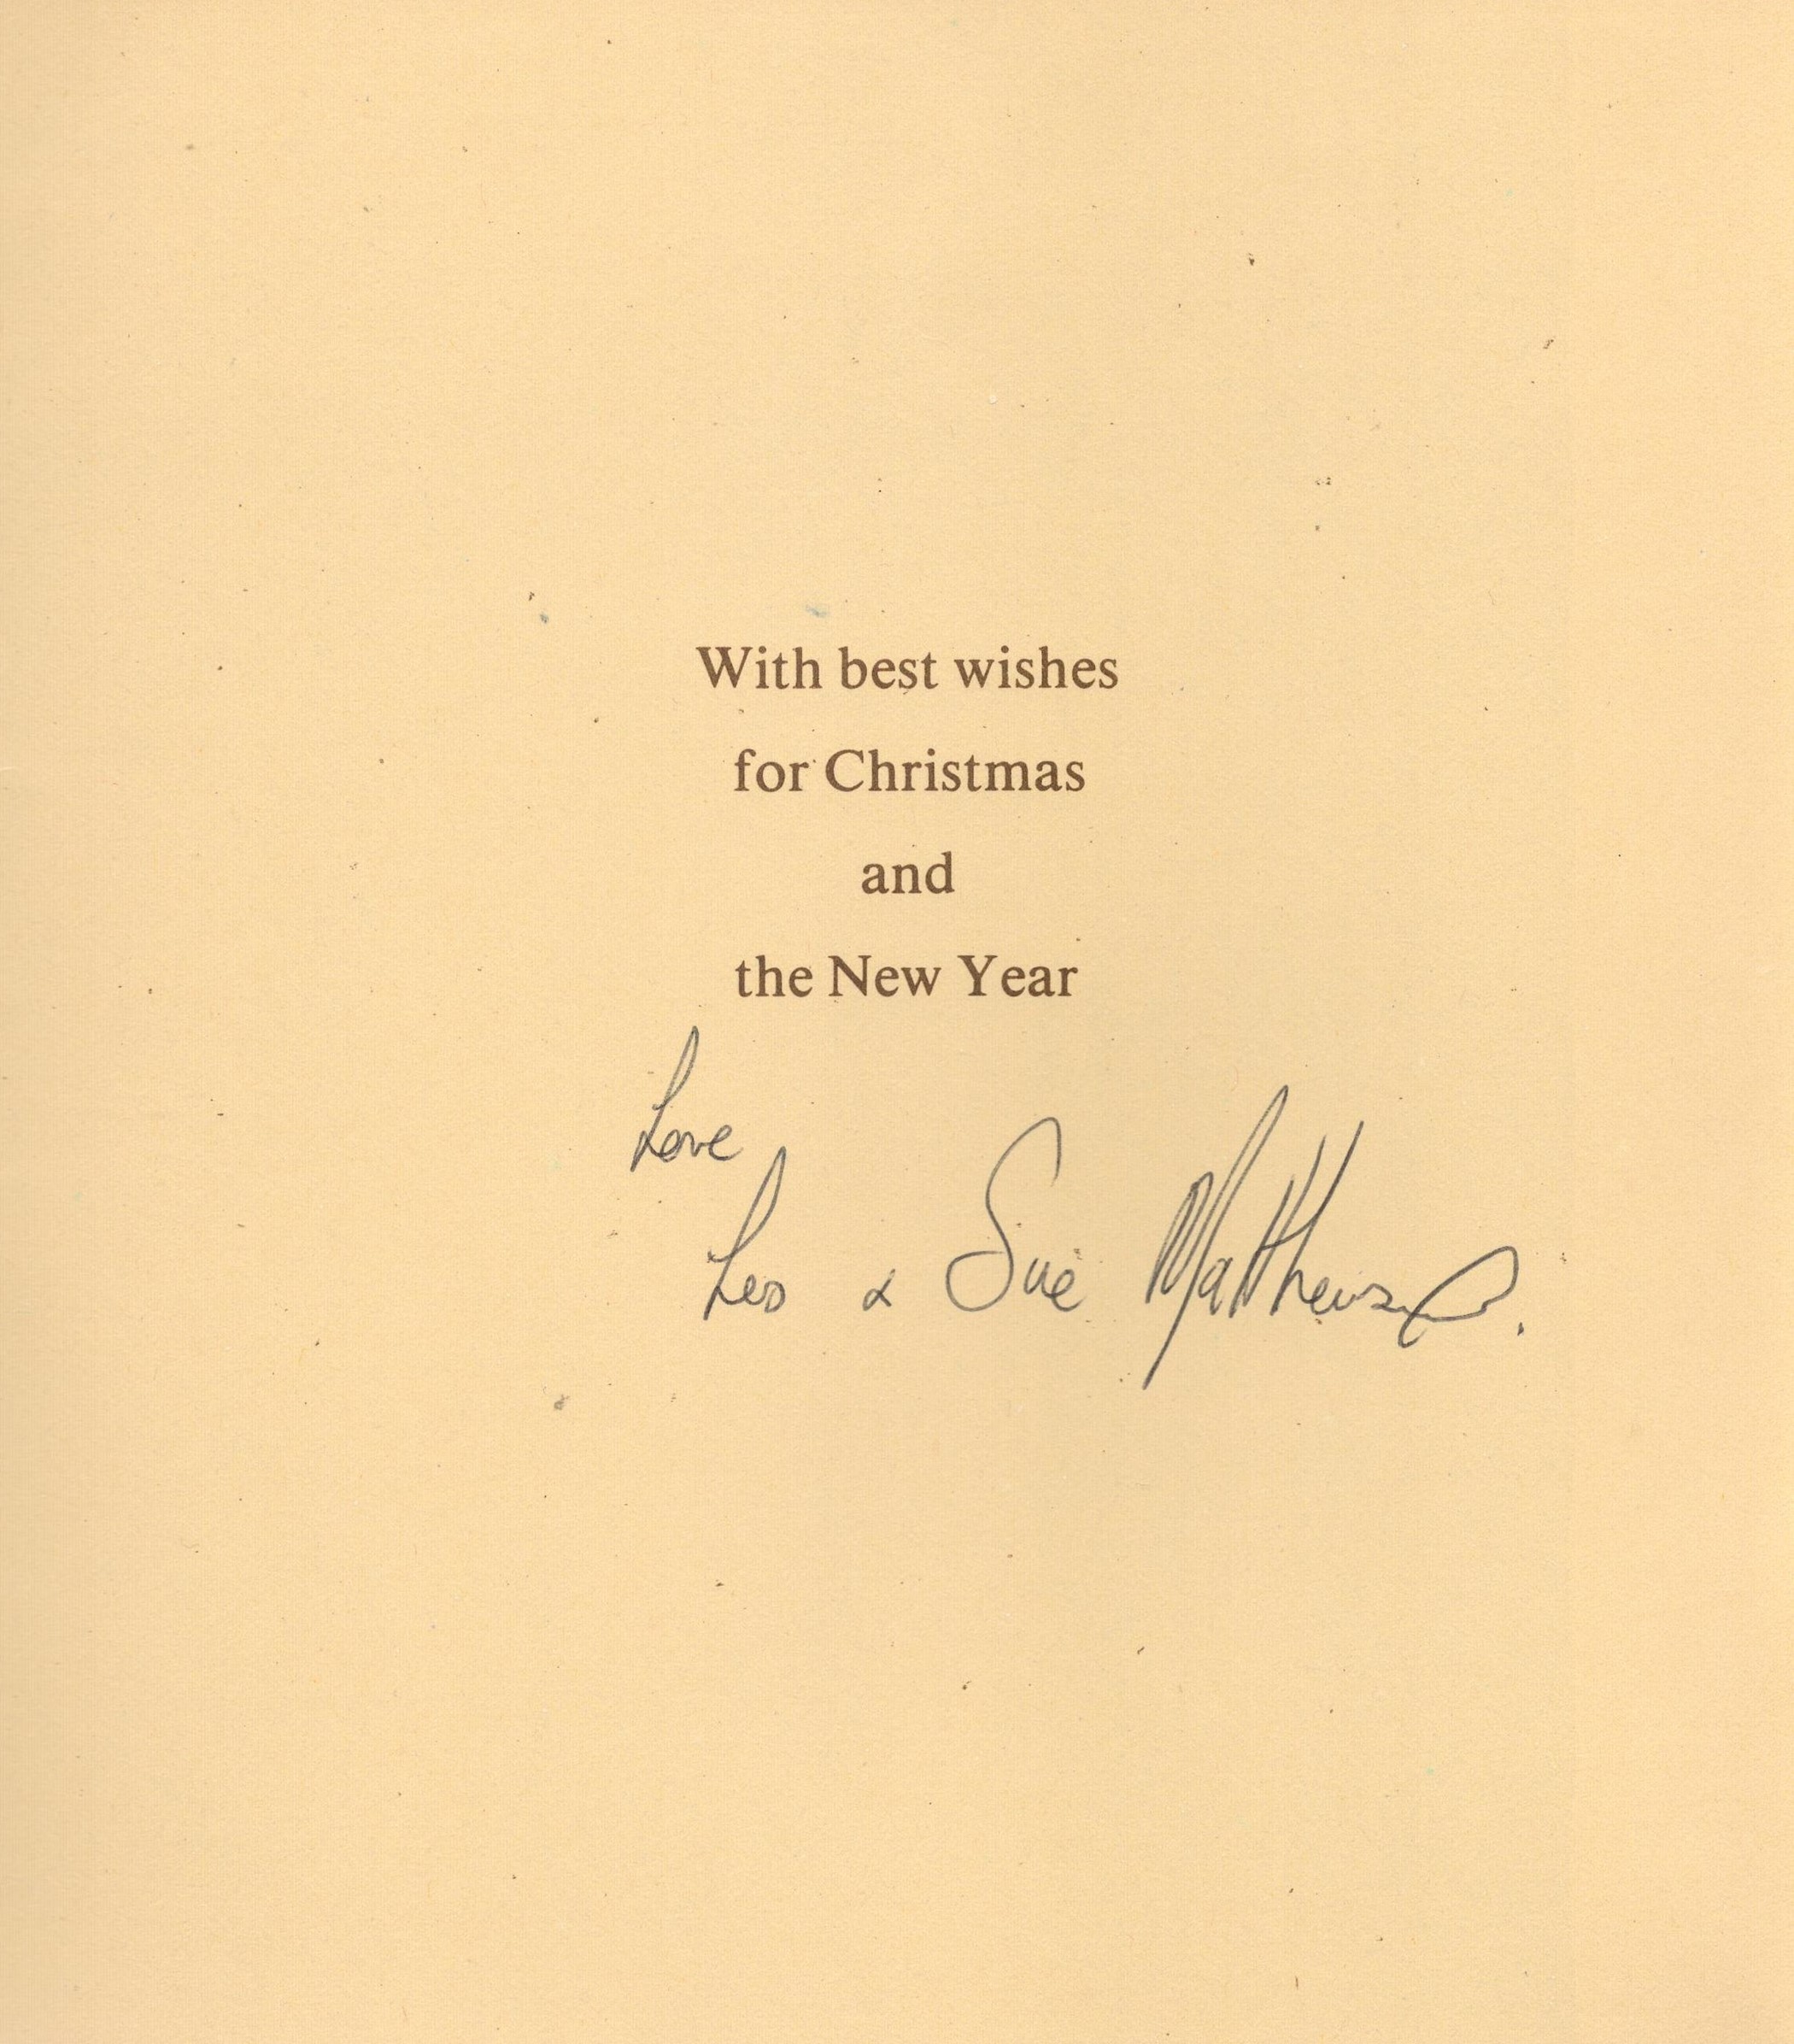 Jan Leeming personal collection Artist Les Mathews signed Christmas card. Les Matthews is a world